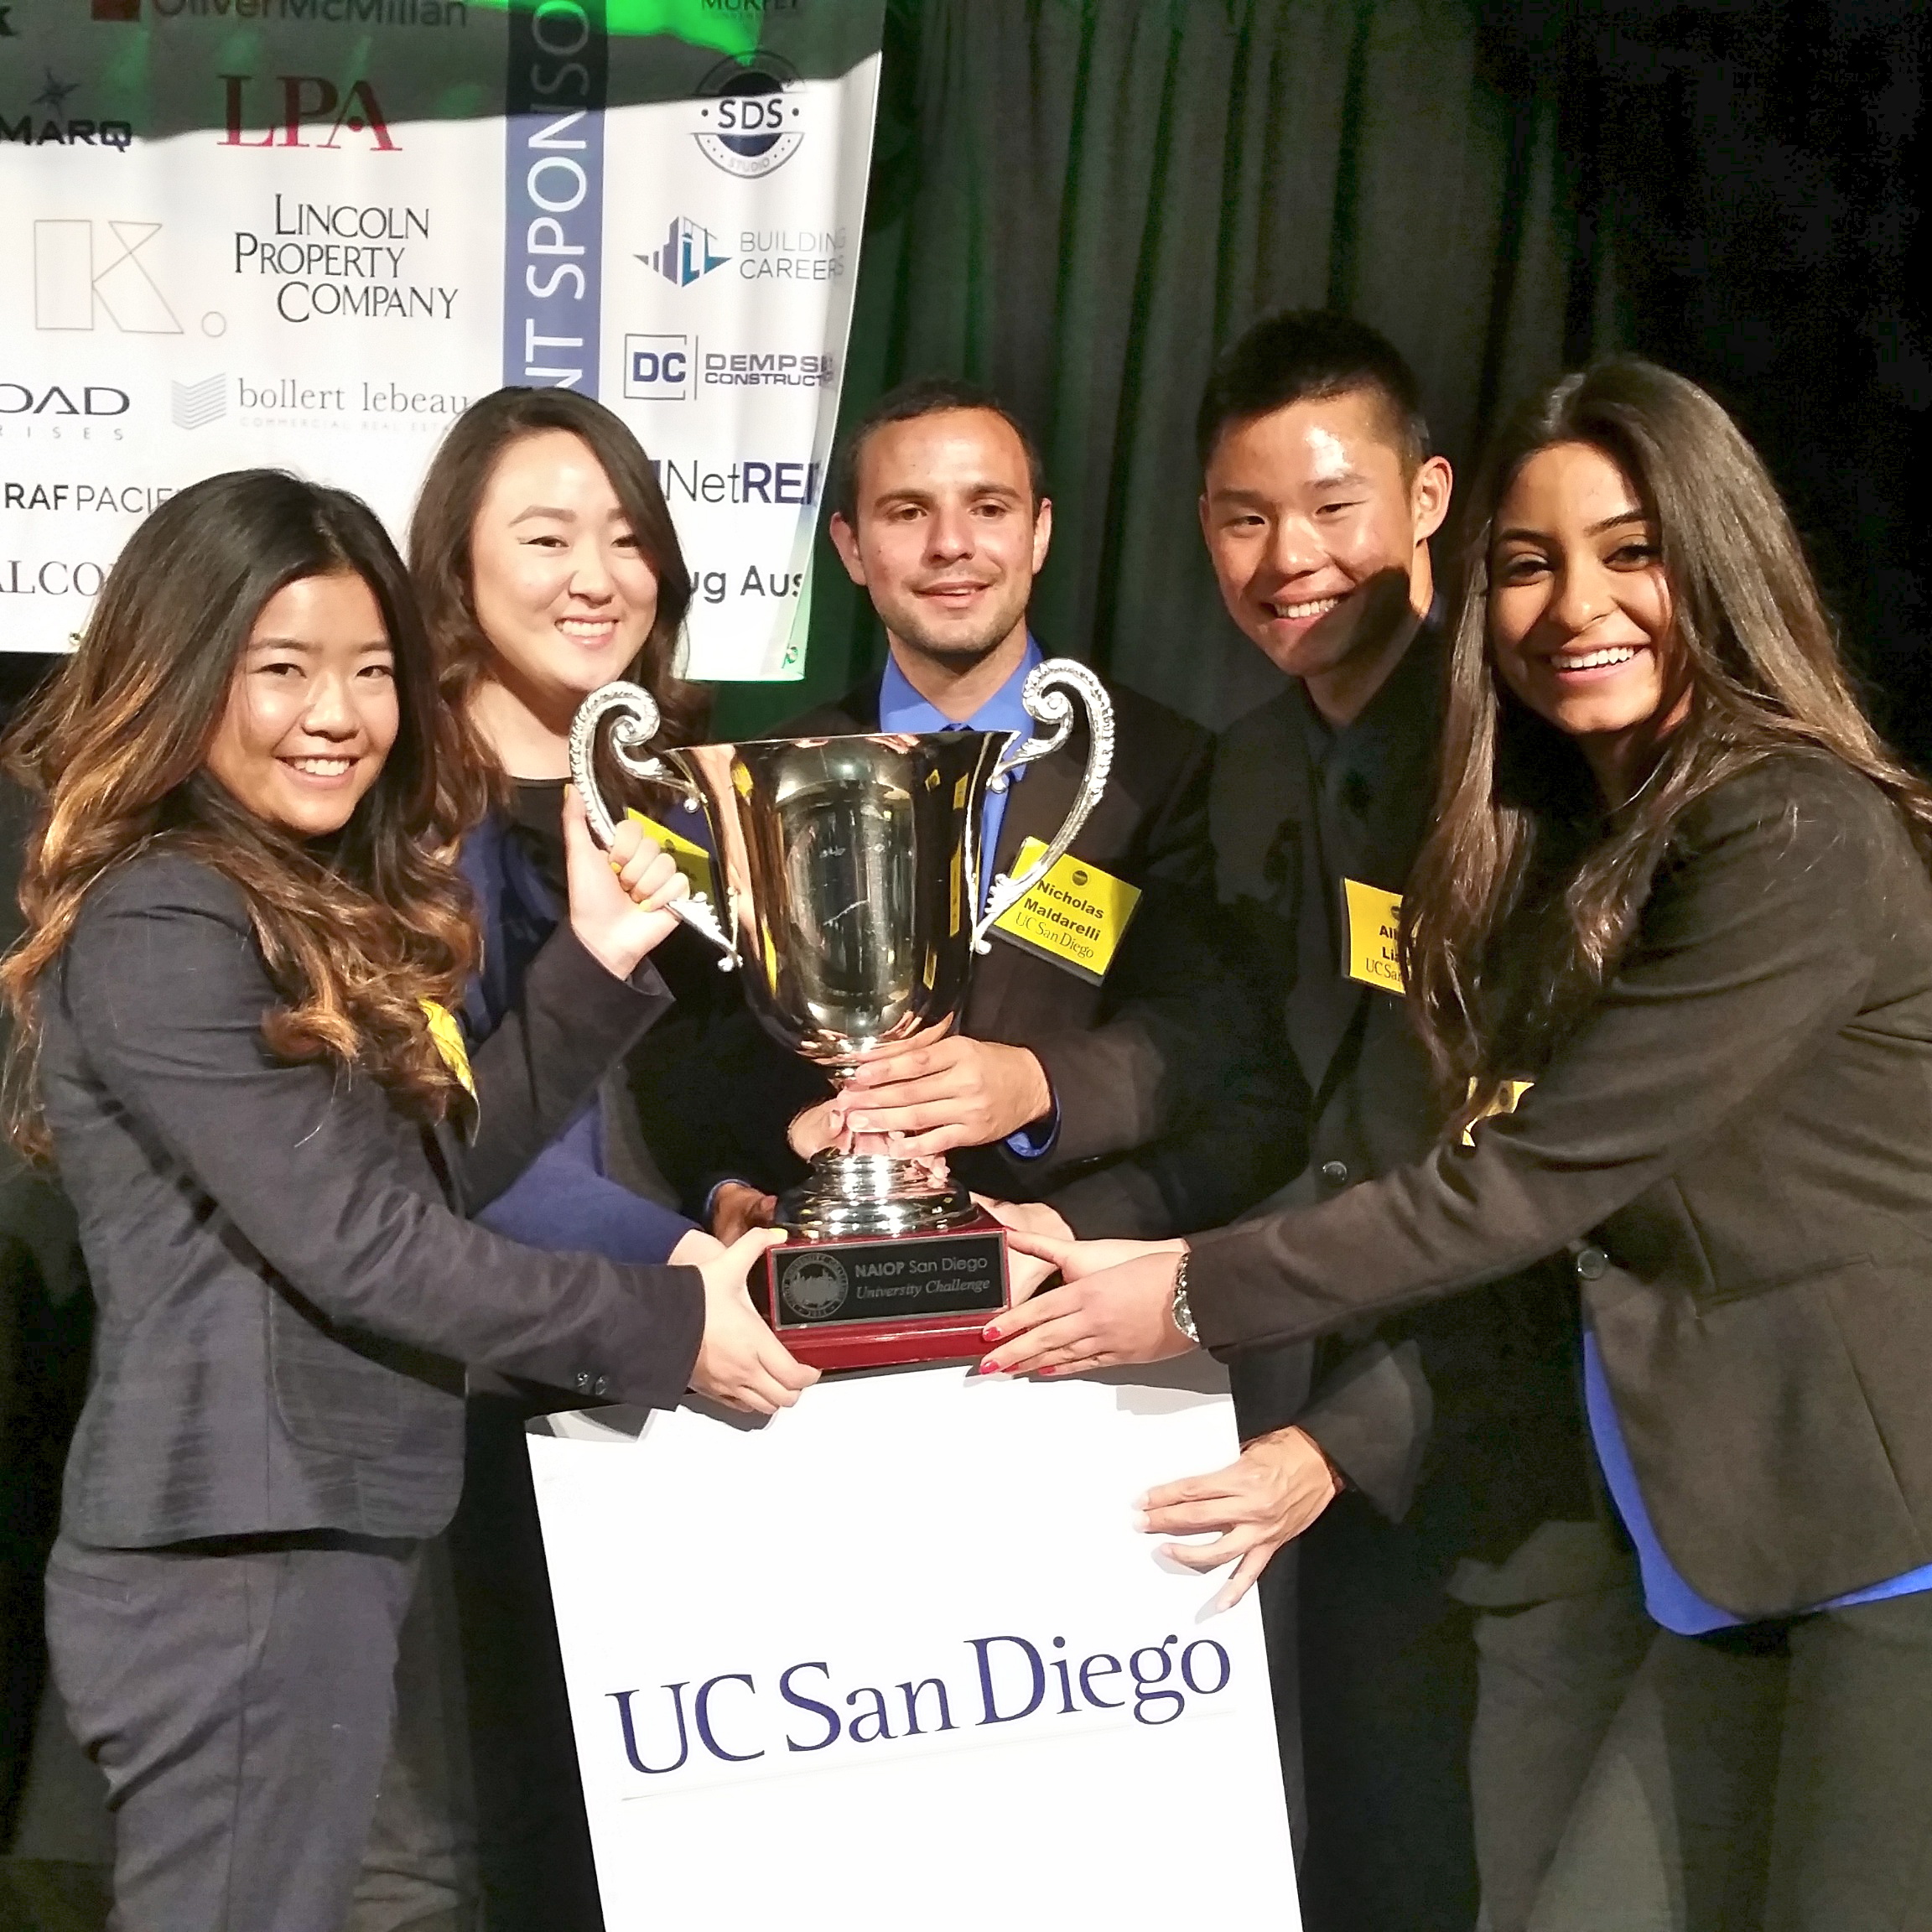 UCSD 2016 team